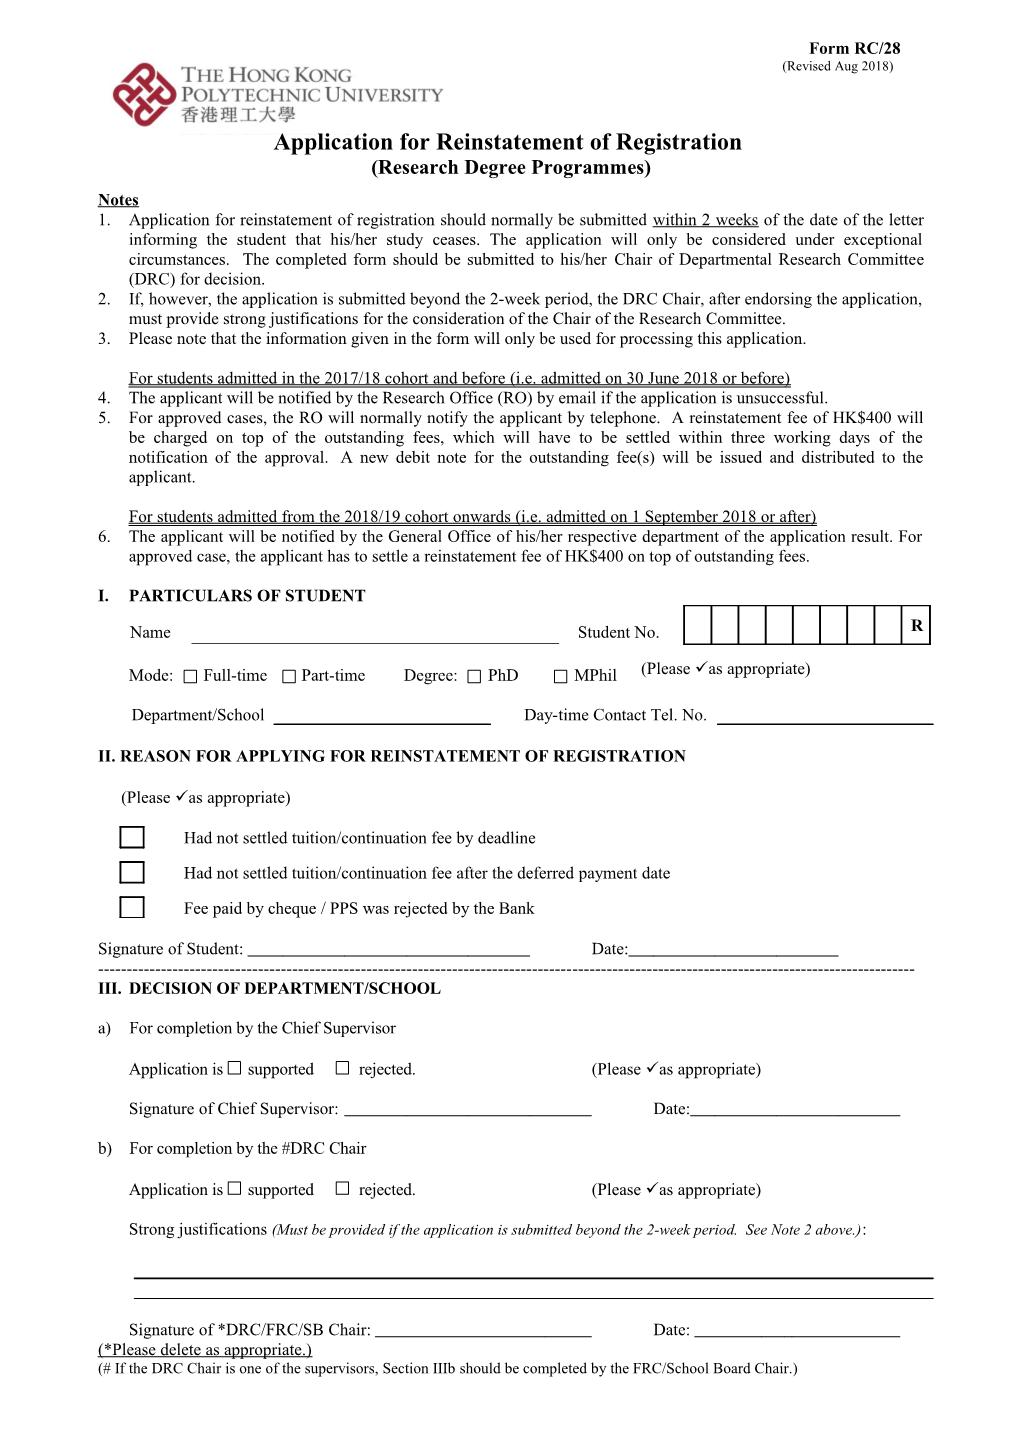 Application for Reinstatement of Registration